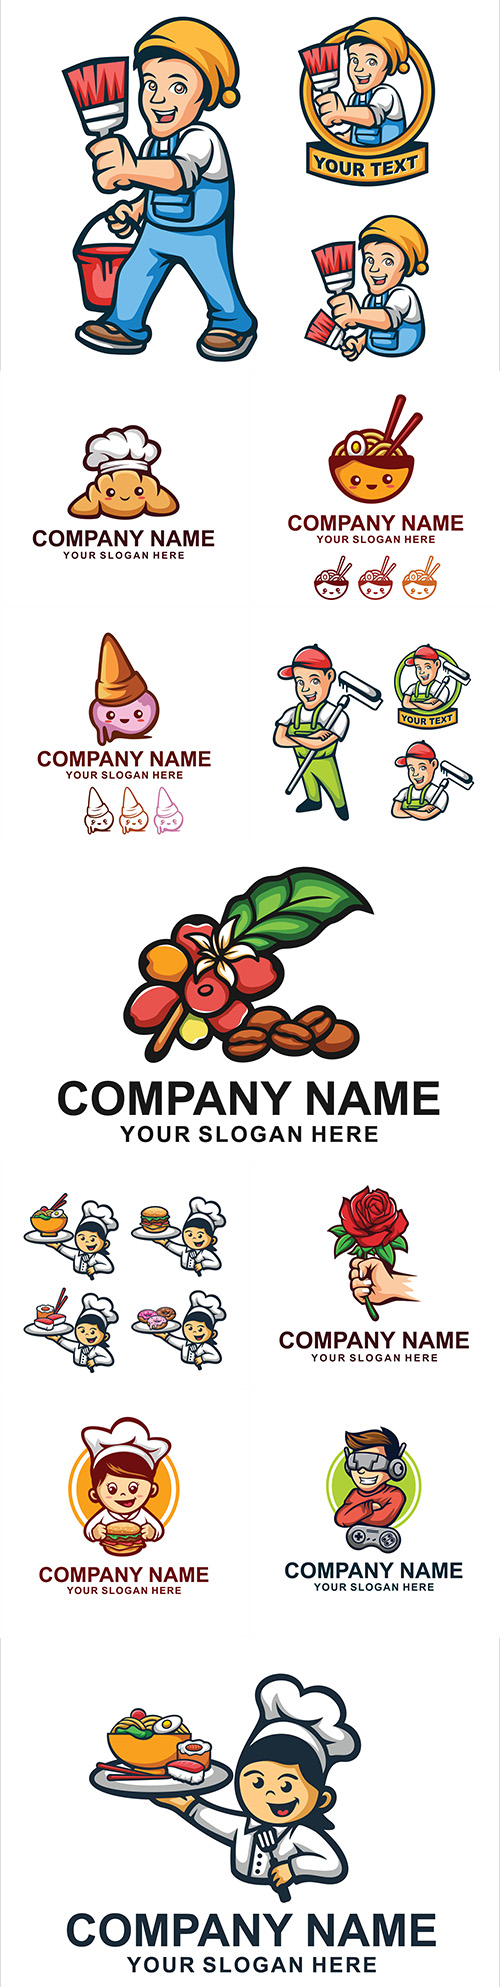 Brand name company business corporate logos design 28
